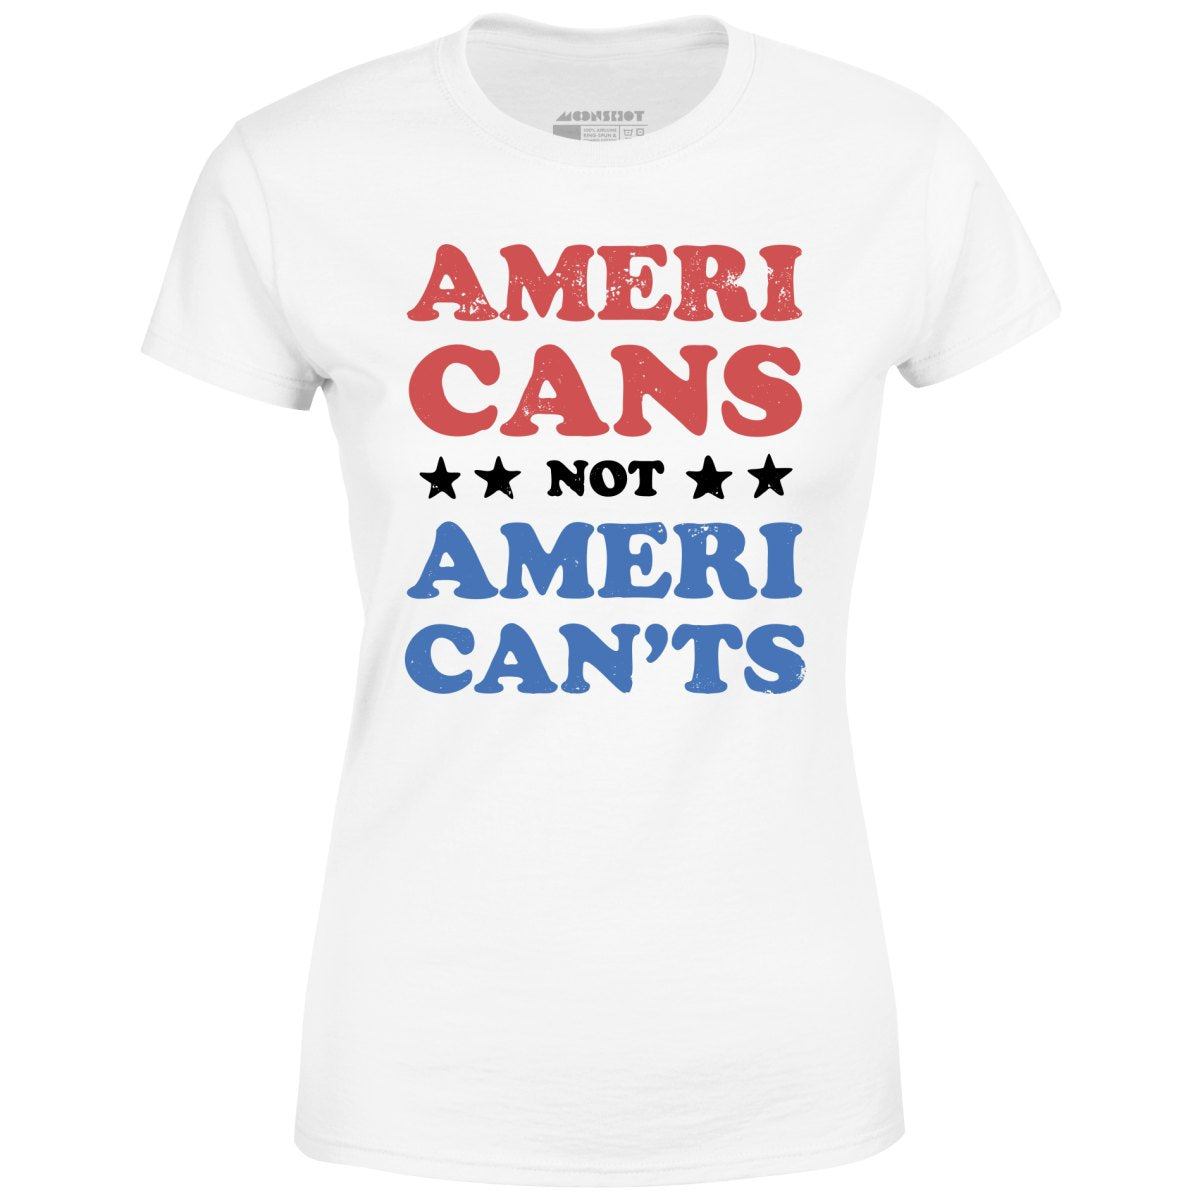 Americans Not American'ts - Women's T-Shirt